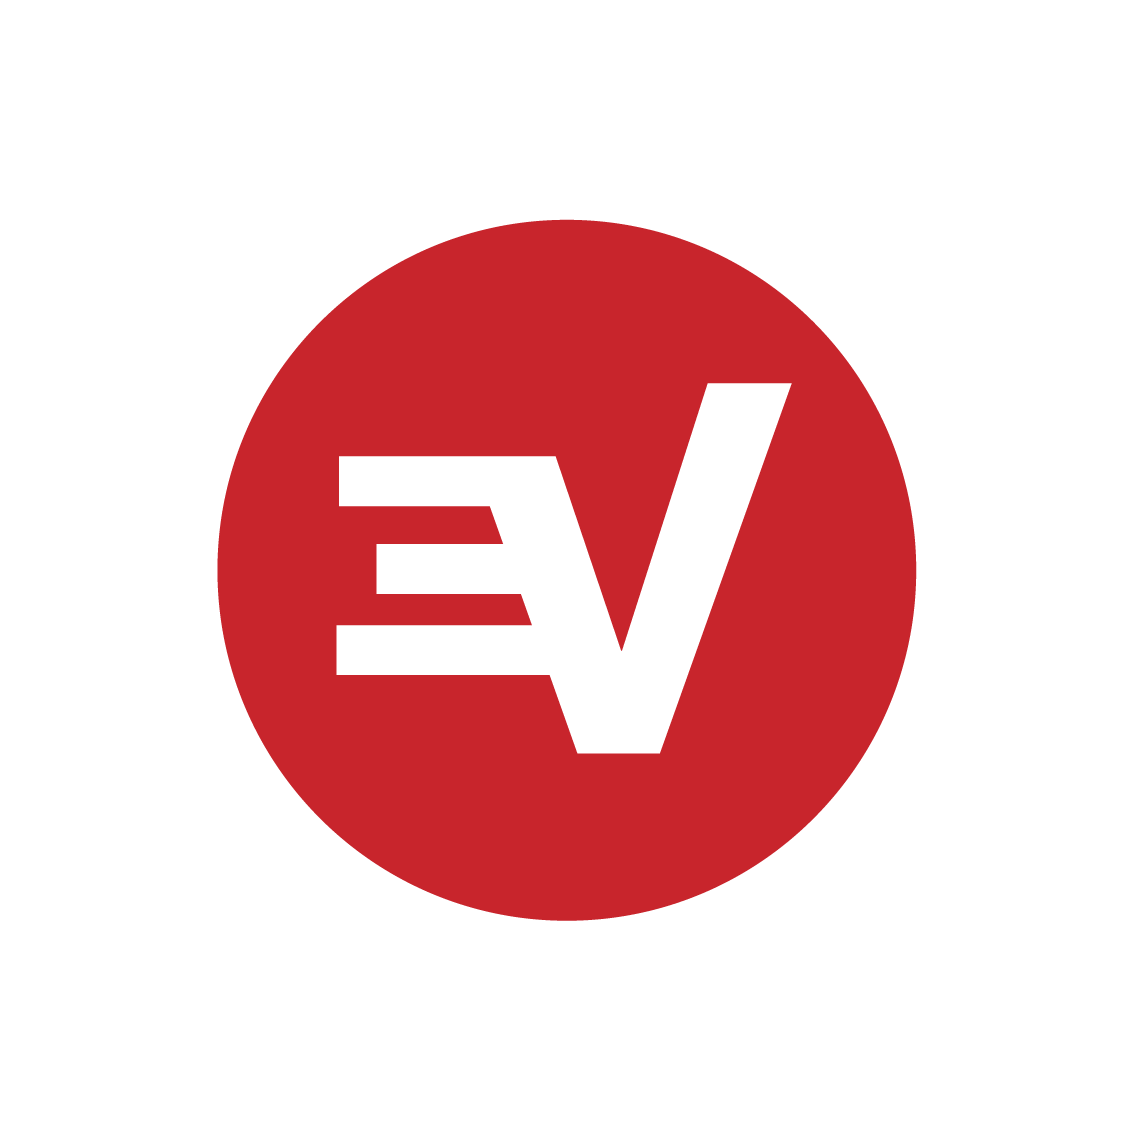 x vpn logo